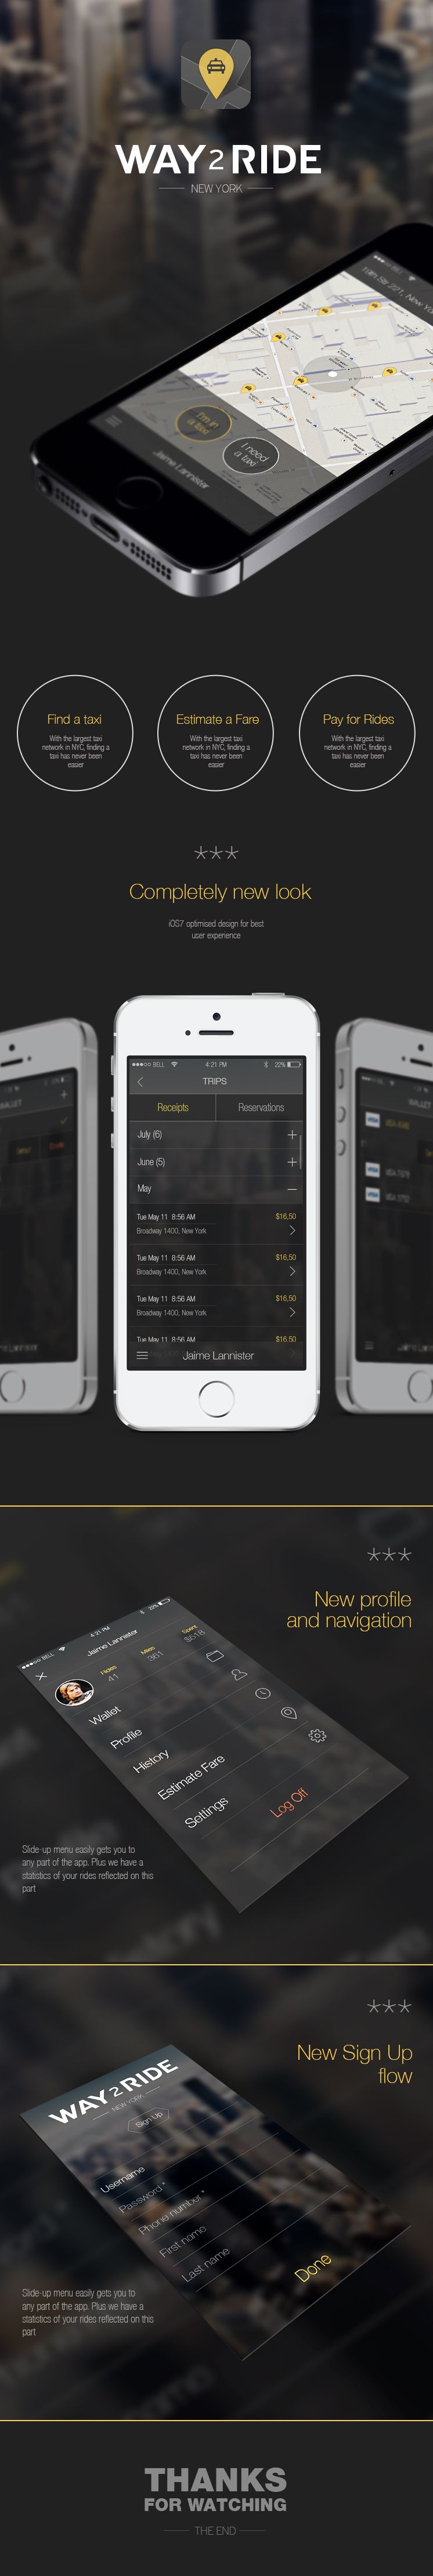 Way2ride New York iOS7 redesign